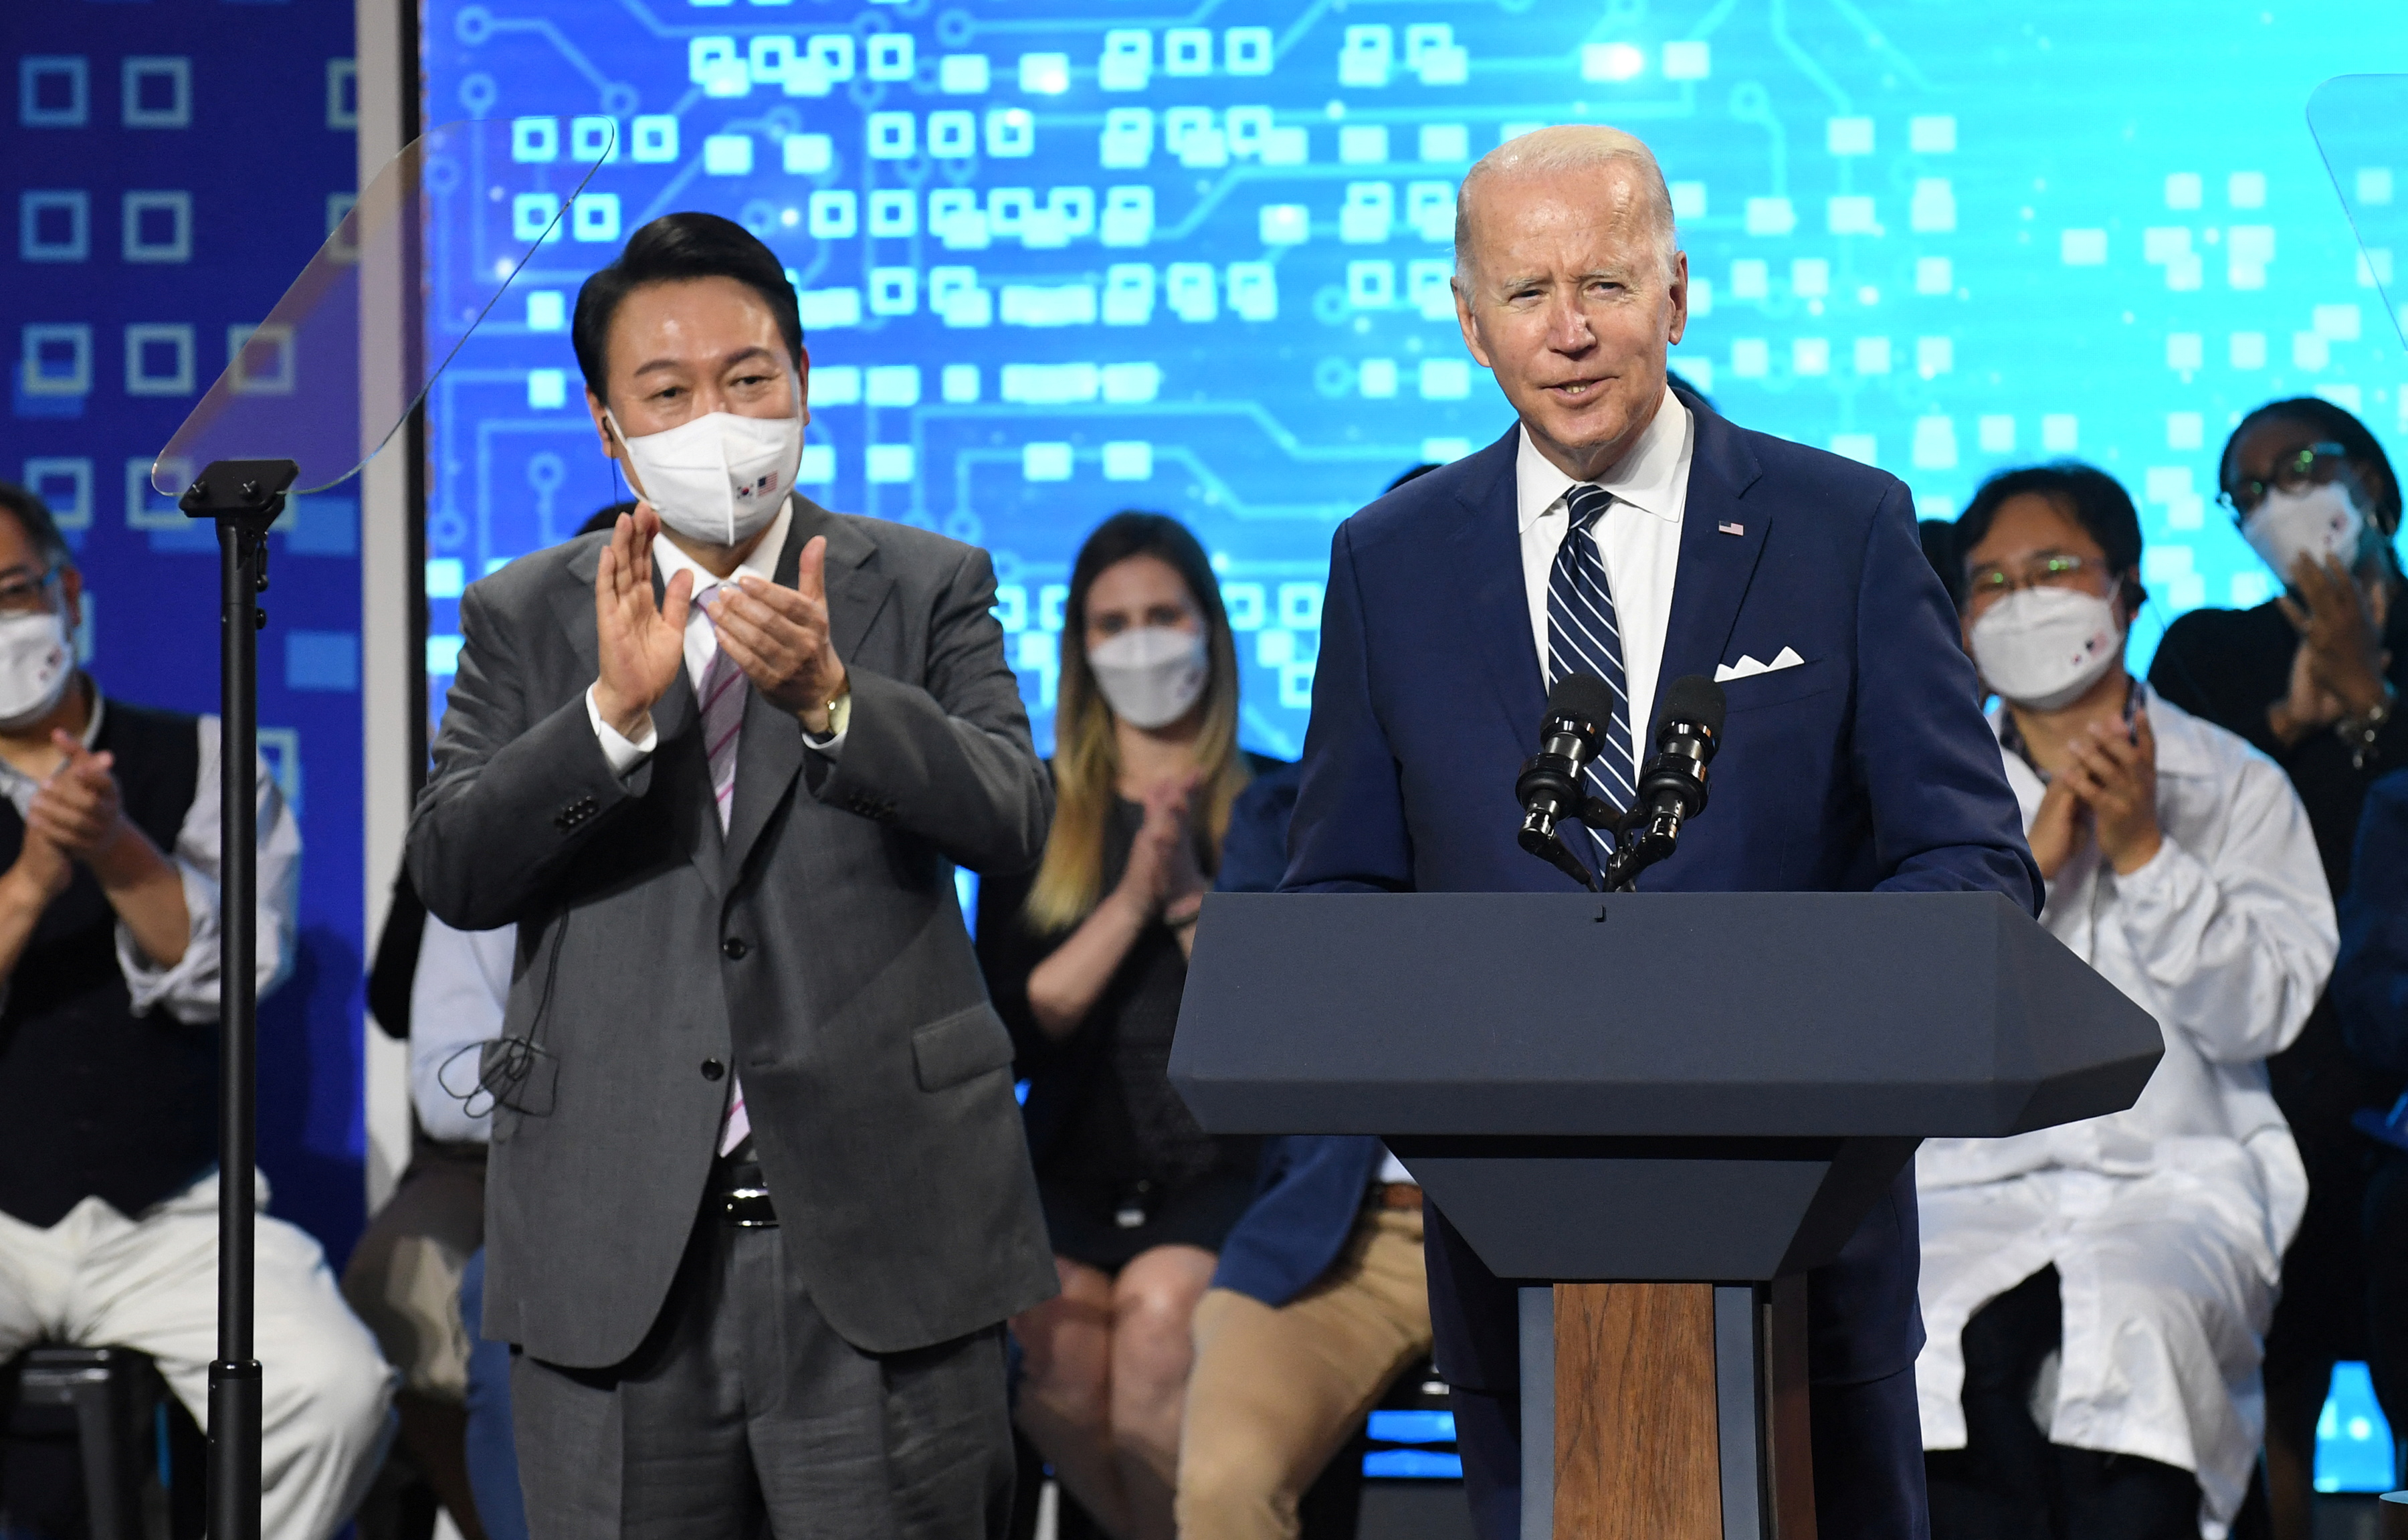 Joe Biden lands in Asia, Beijing launches South China Sea drills